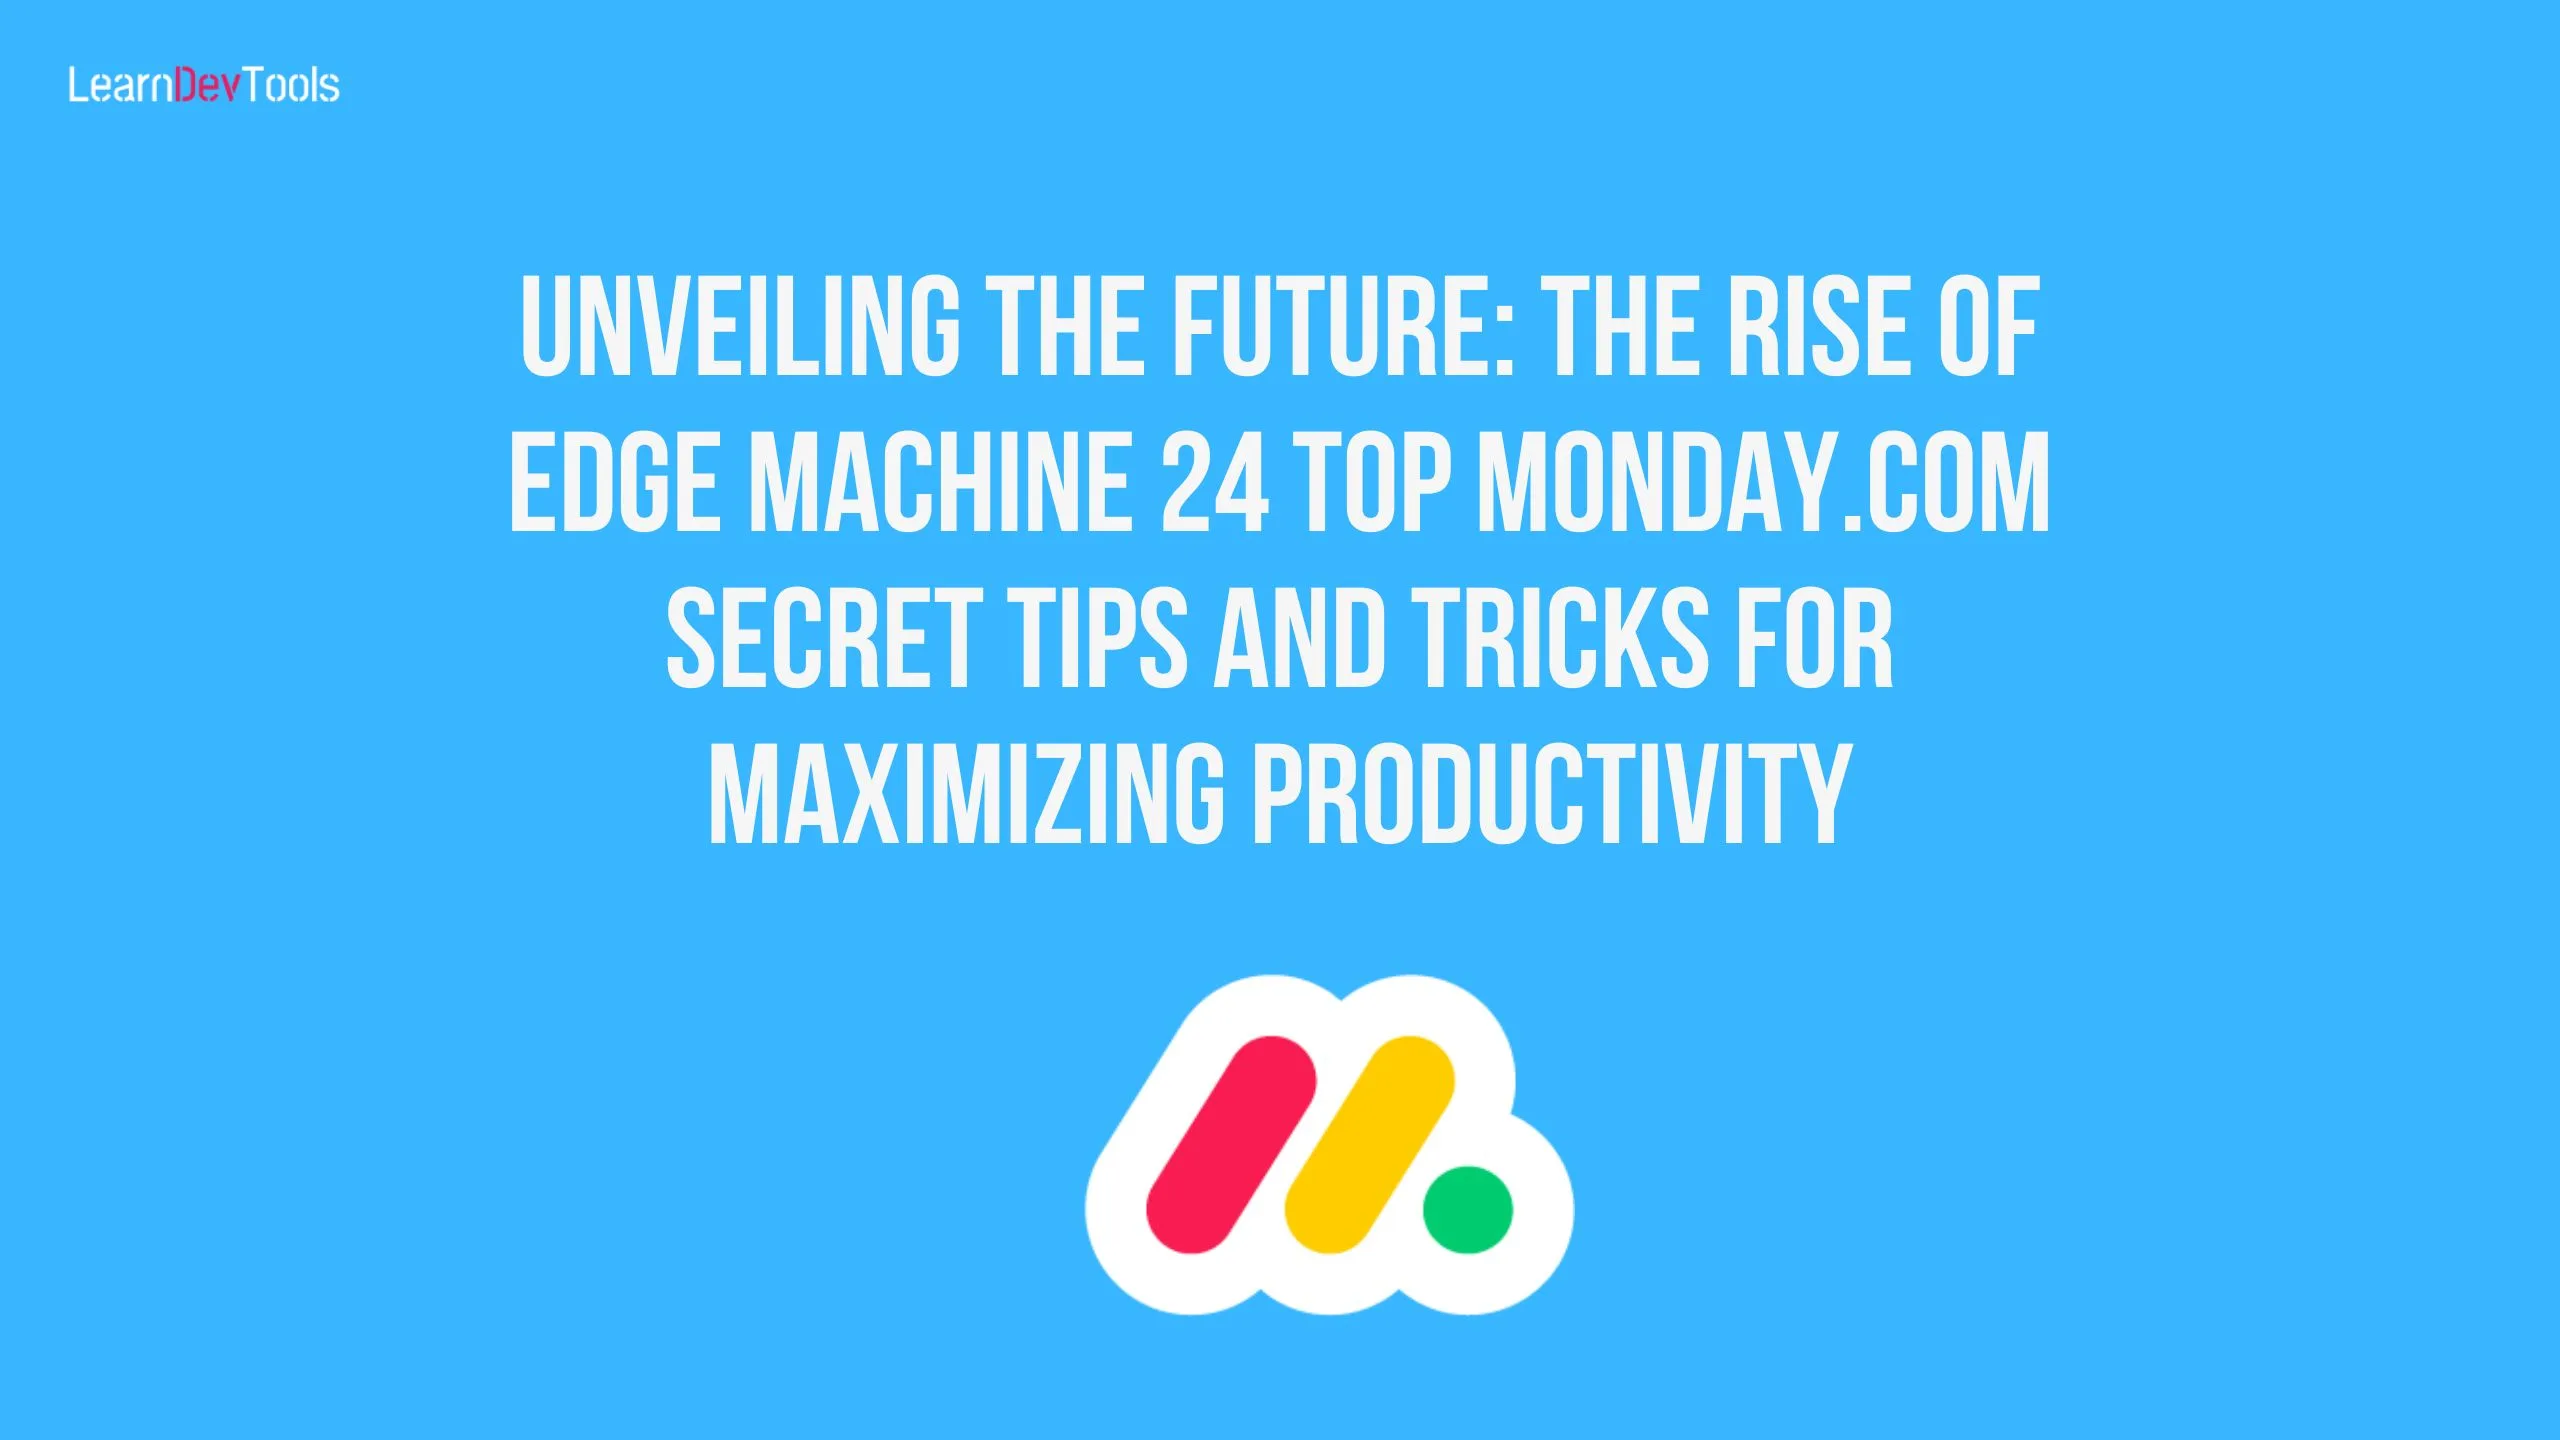 24 Top monday.com Secret Tips and Tricks for Maximizing Productivity